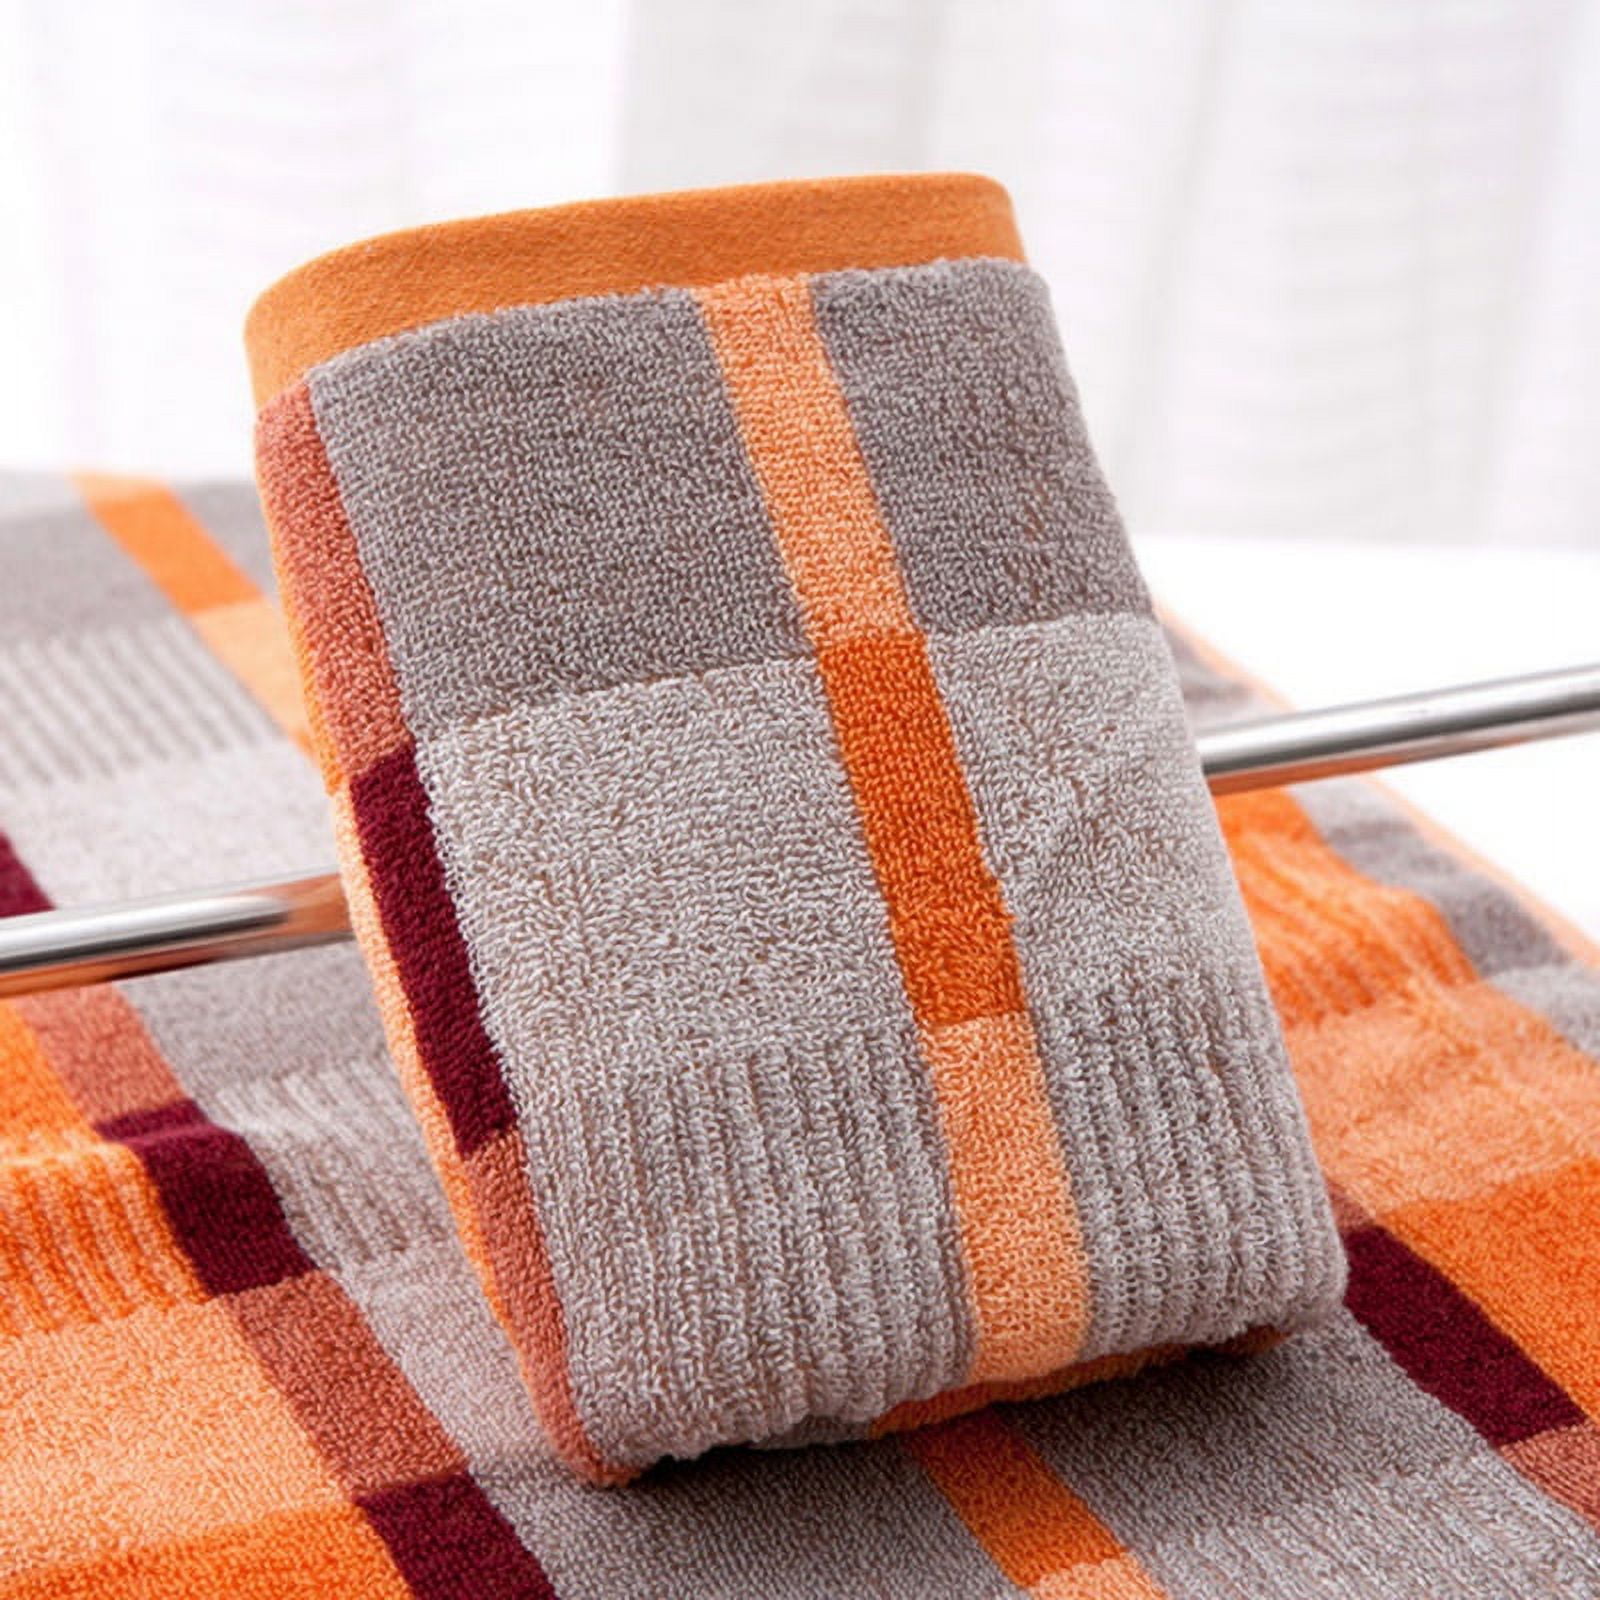 Plaid Hand & Bath Towels to Match Any Bathroom Decor